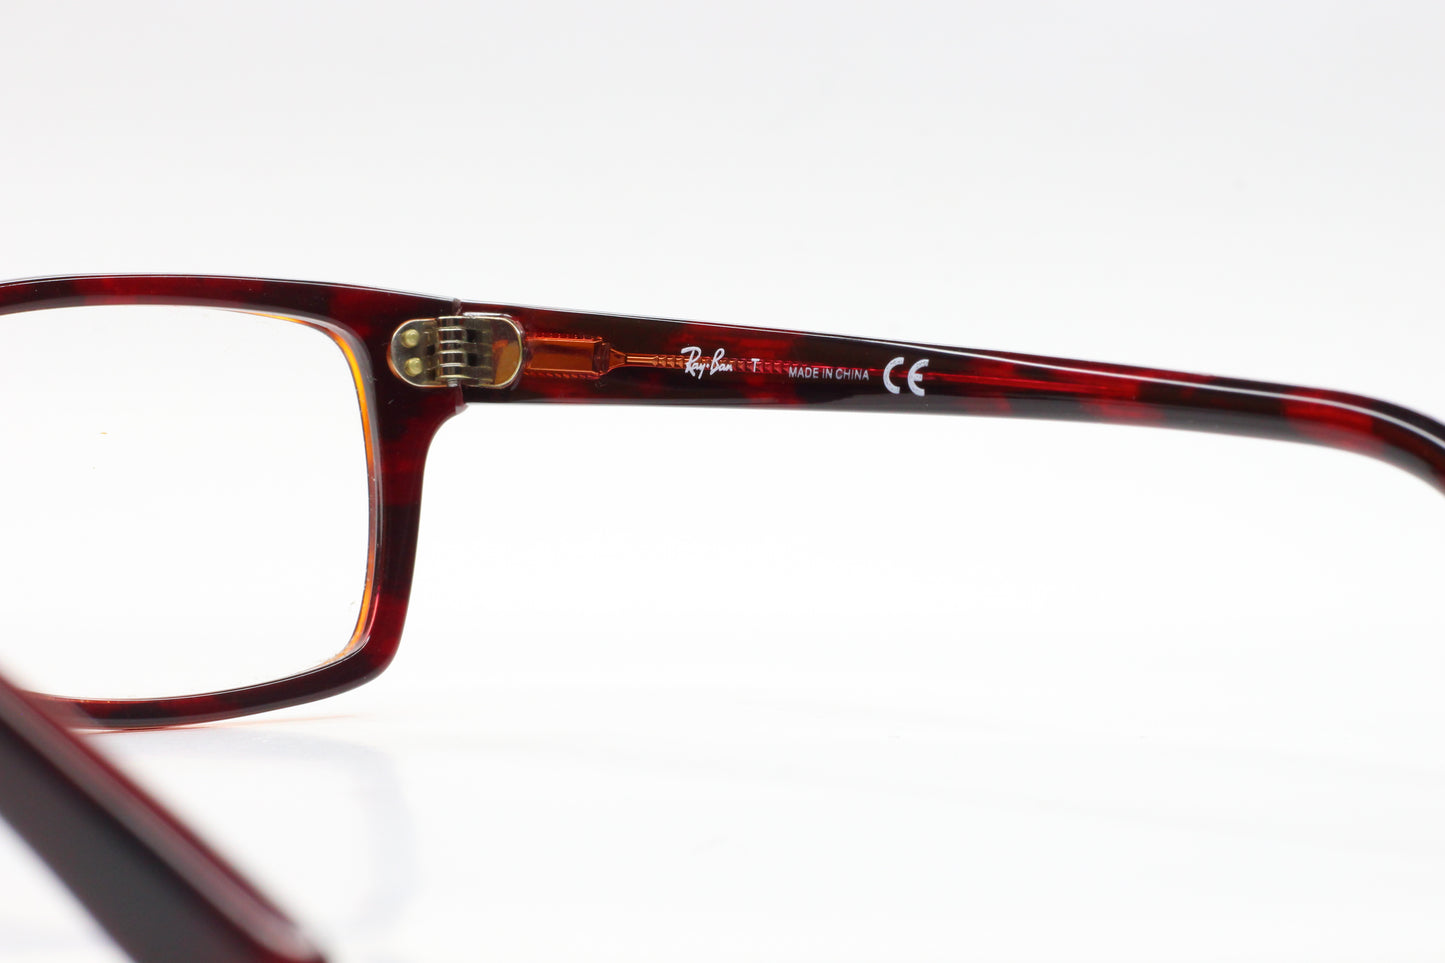 Ray-Ban RB5225 5034 Red Havana Acetate Rectangular Eyeglasses